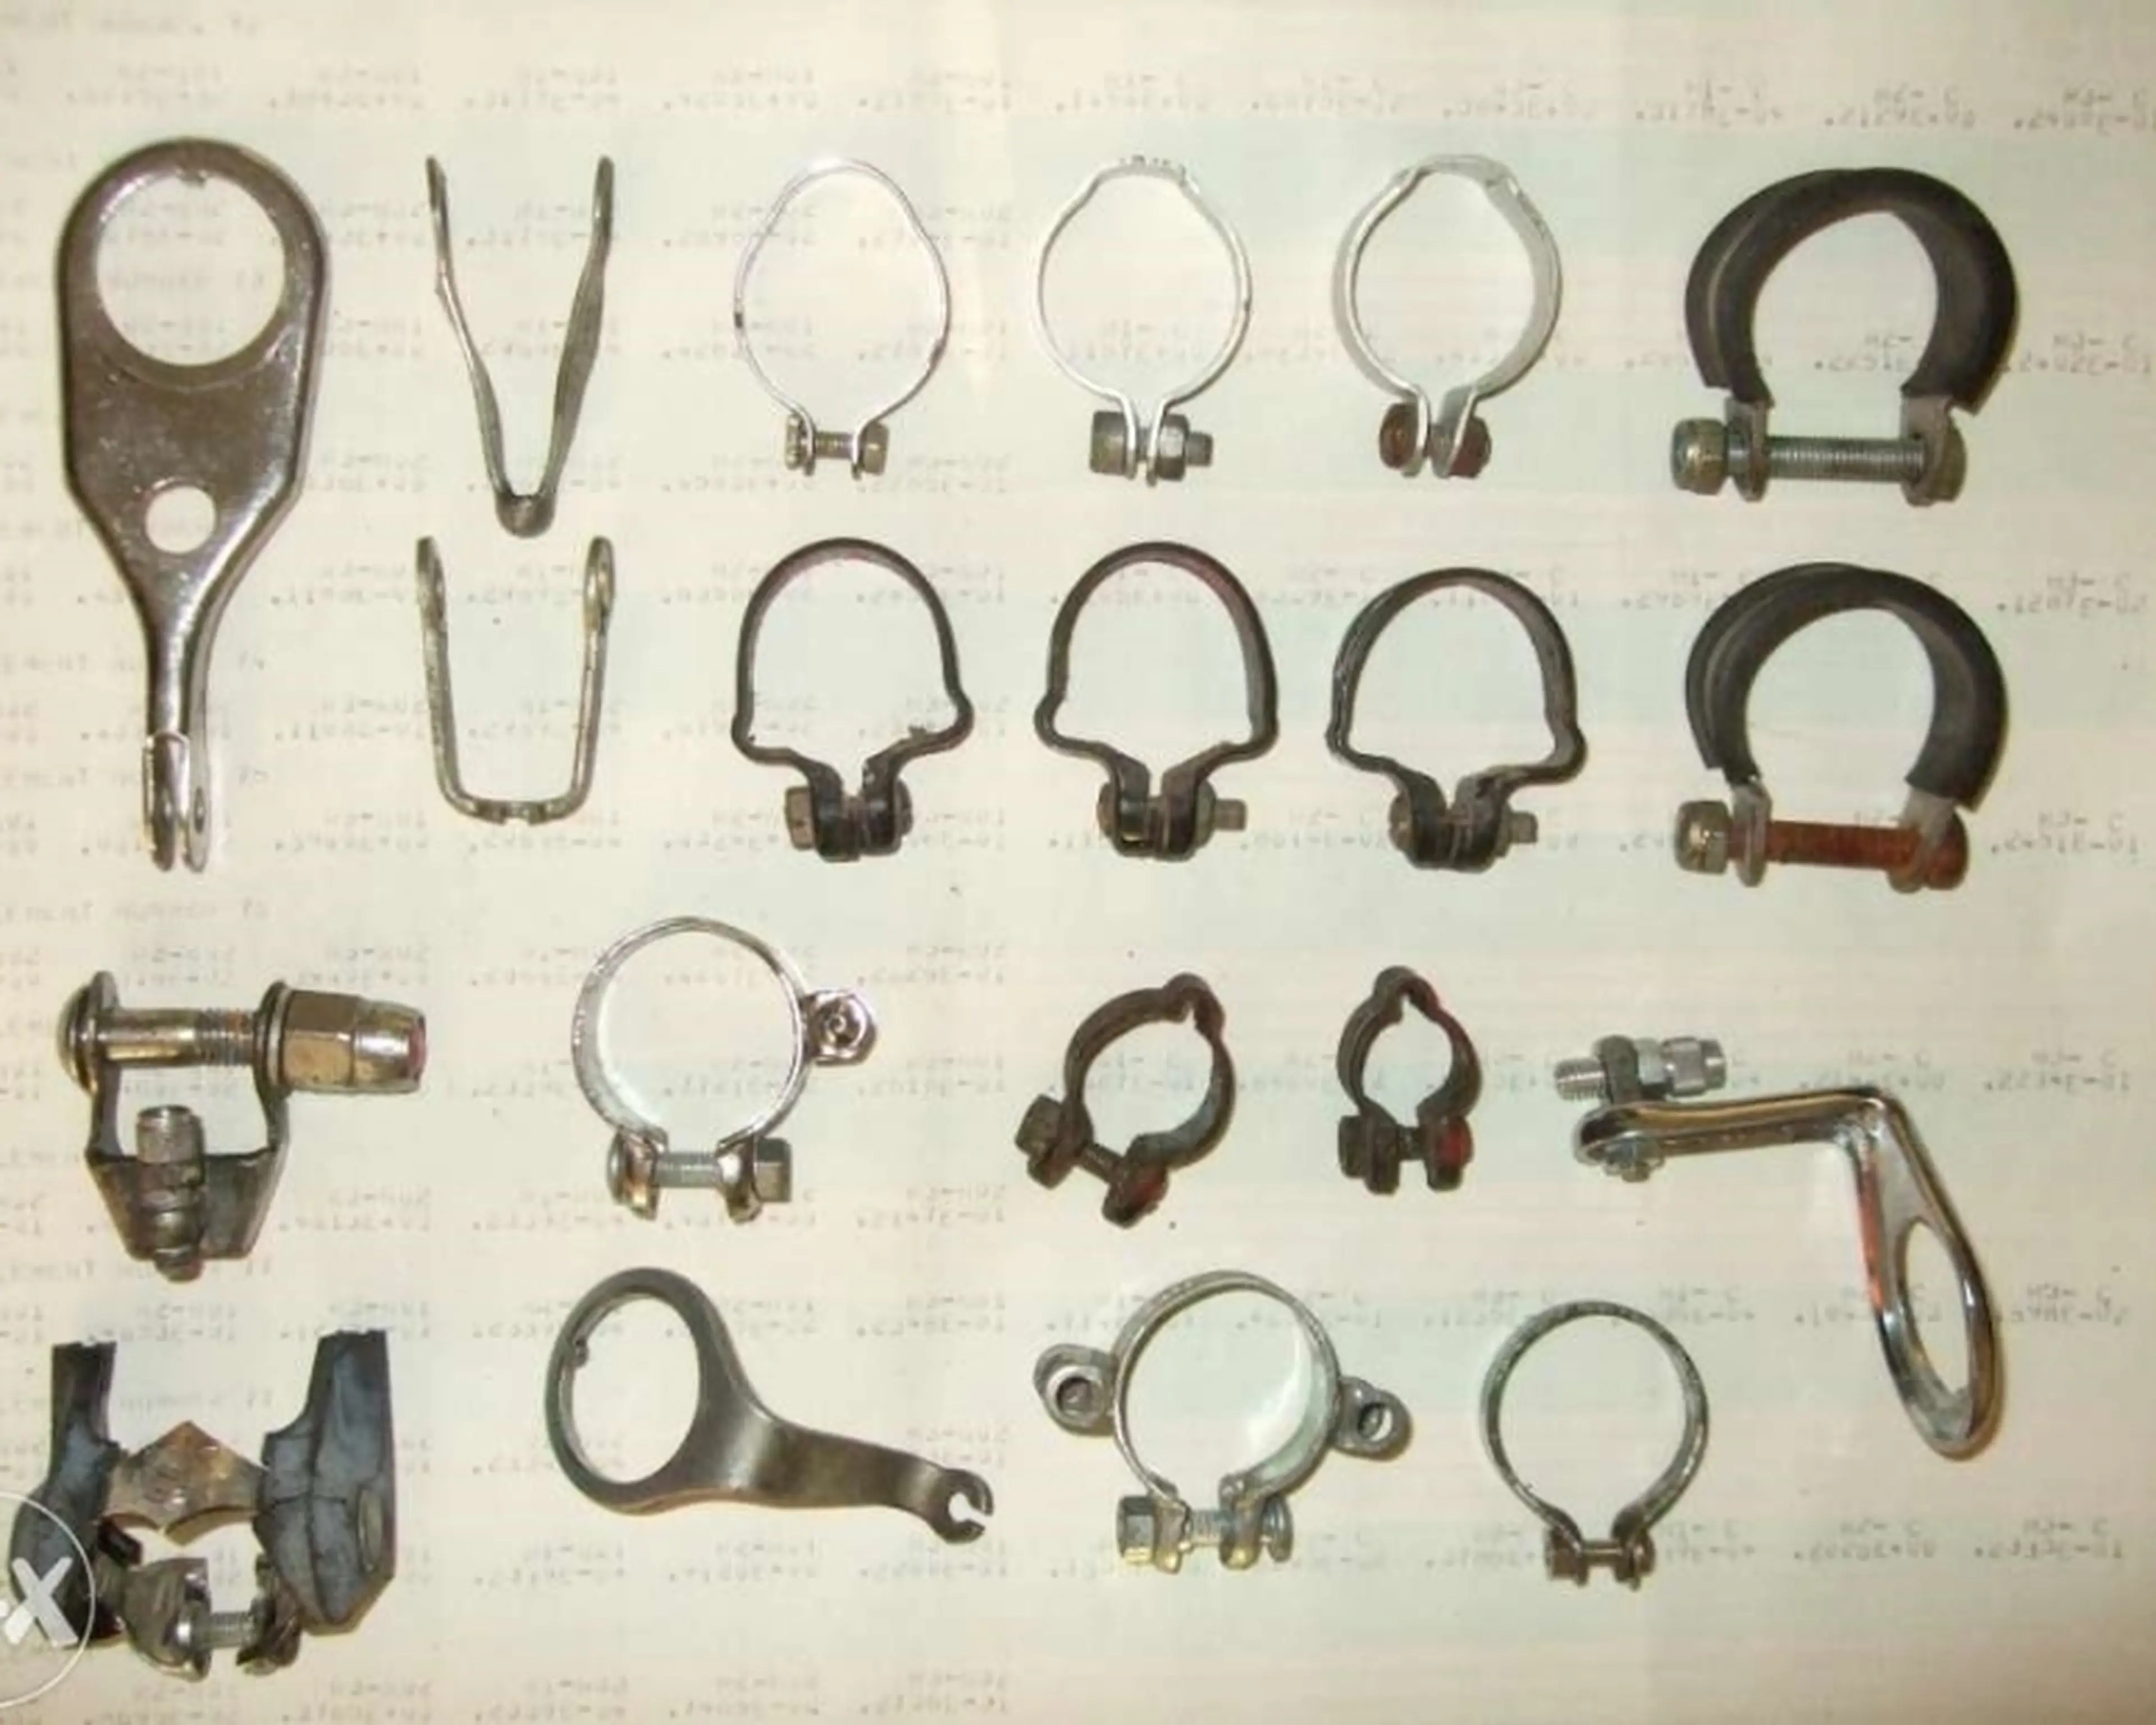 1. Coliere cabluri Shimano sau Sachs Huret